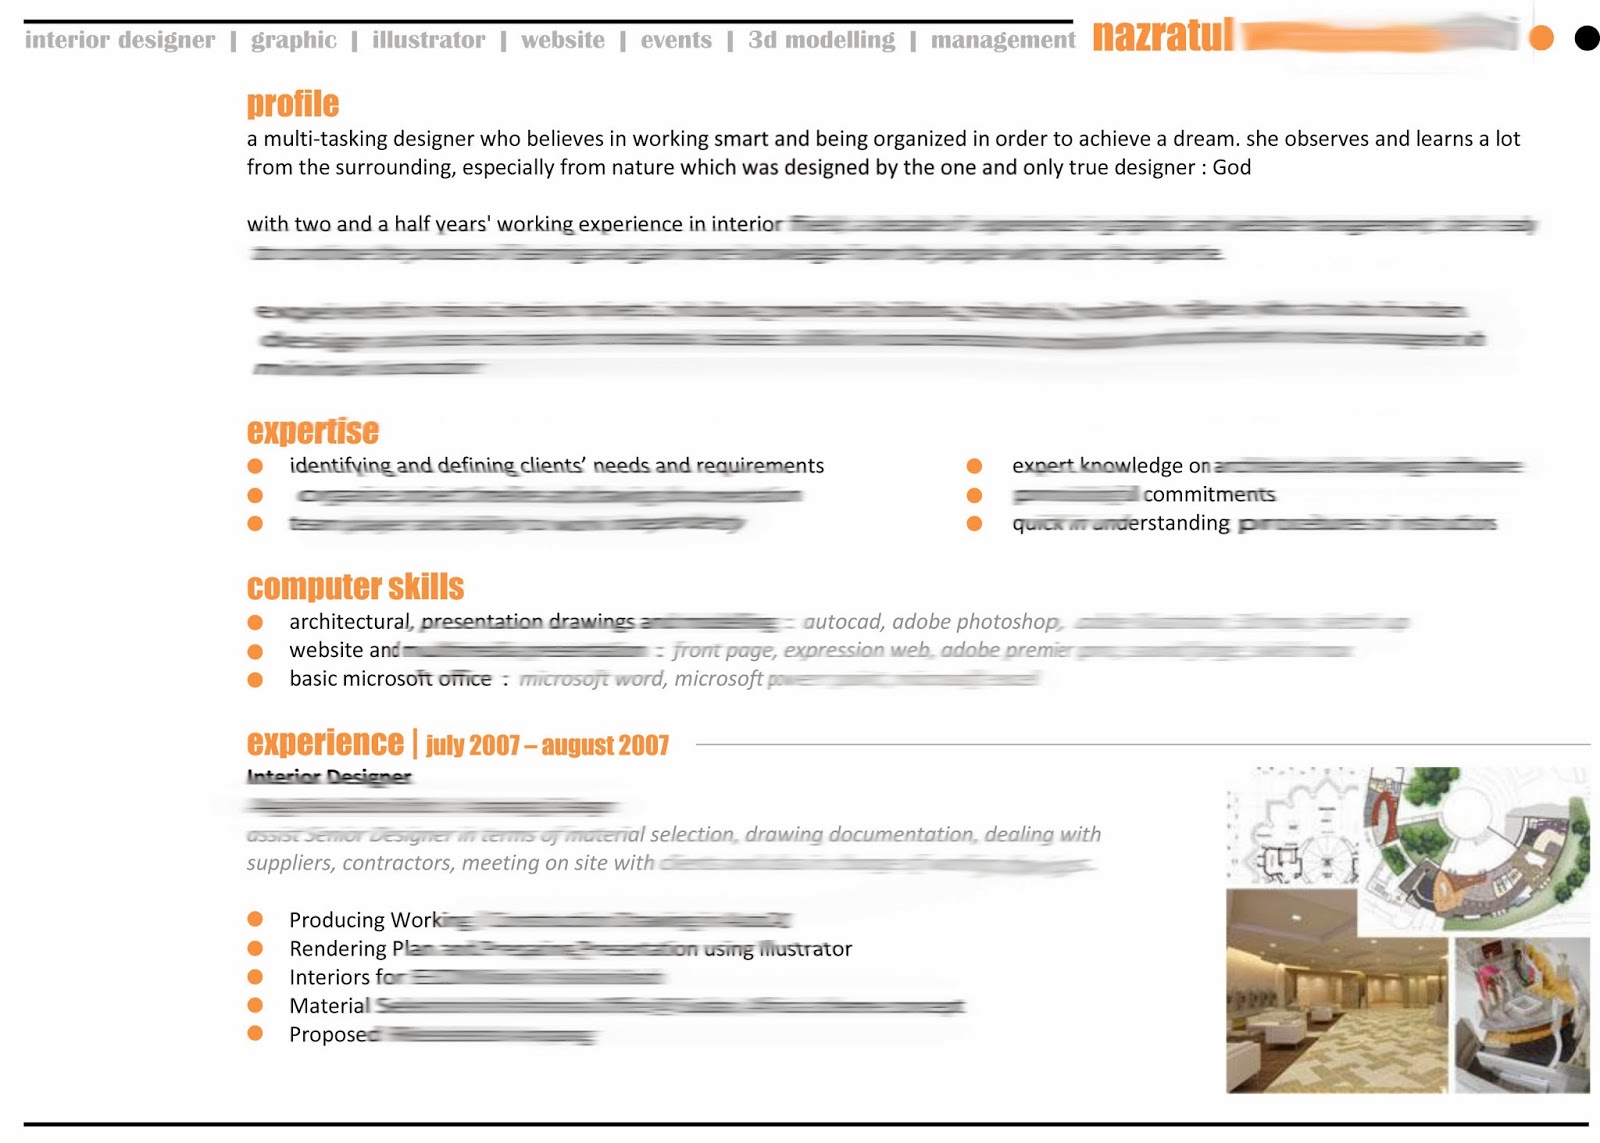 Contoh ayat objektif resume - proofreadingwebsite.web.fc2.com